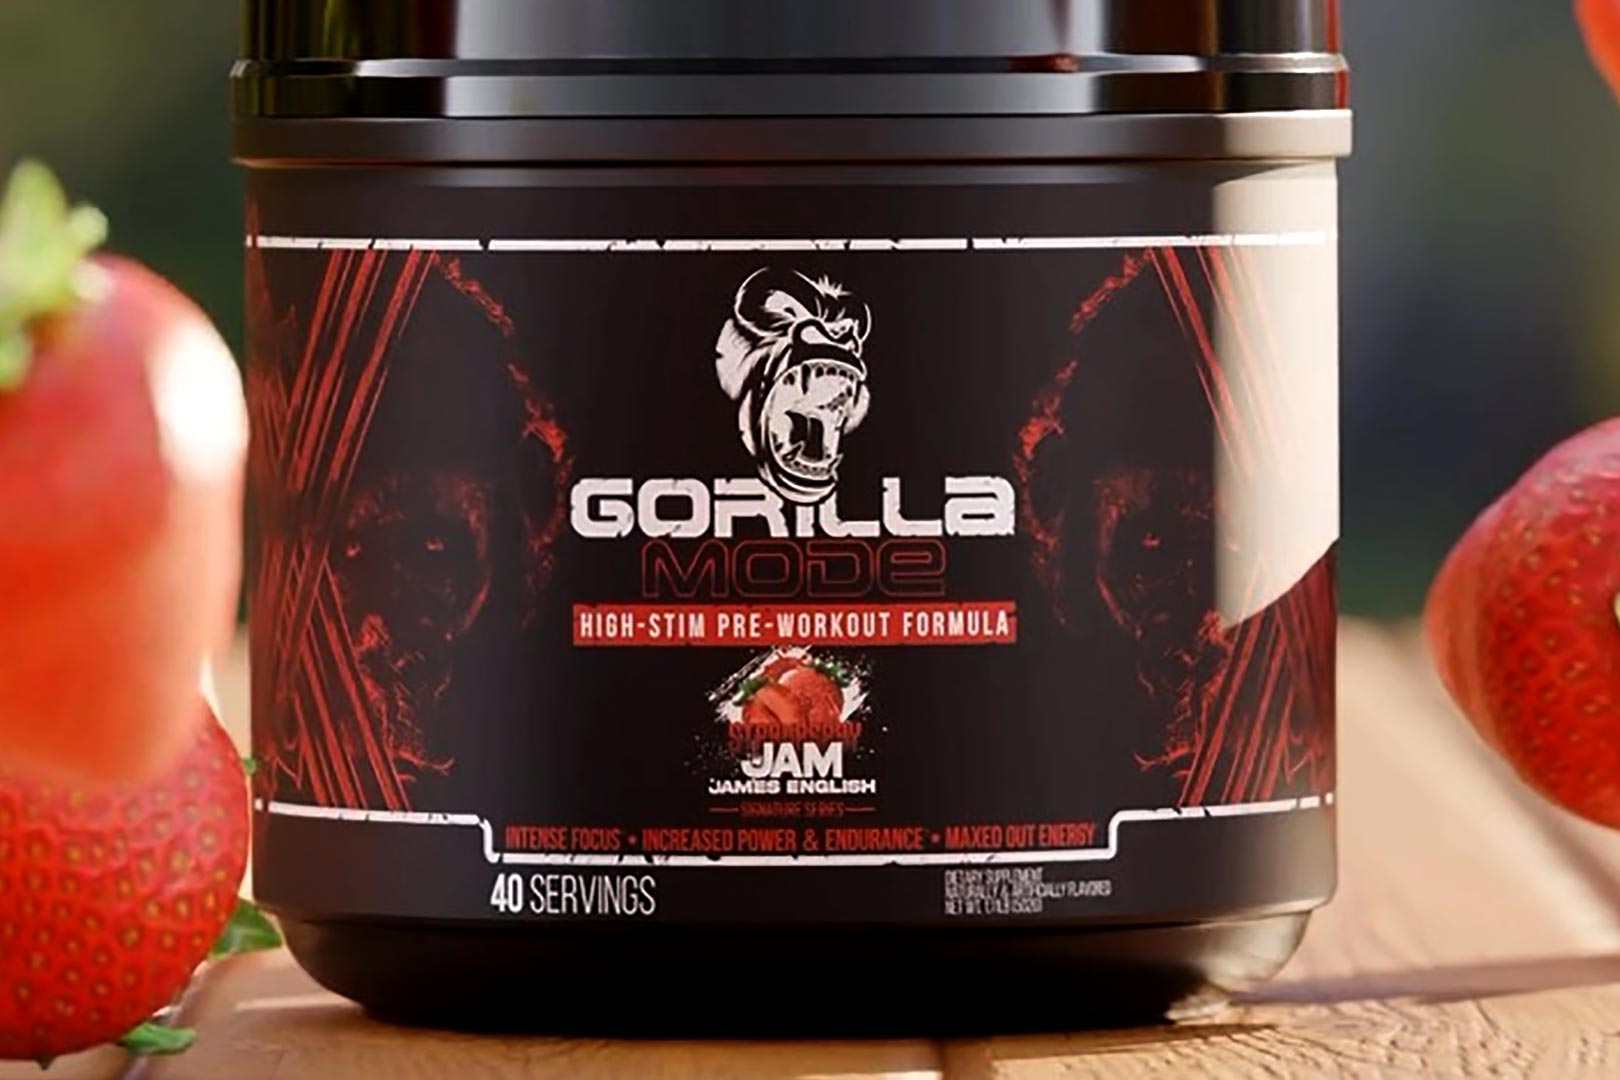 Gorilla Mind and James English reveal their high-stim Gorilla Mode